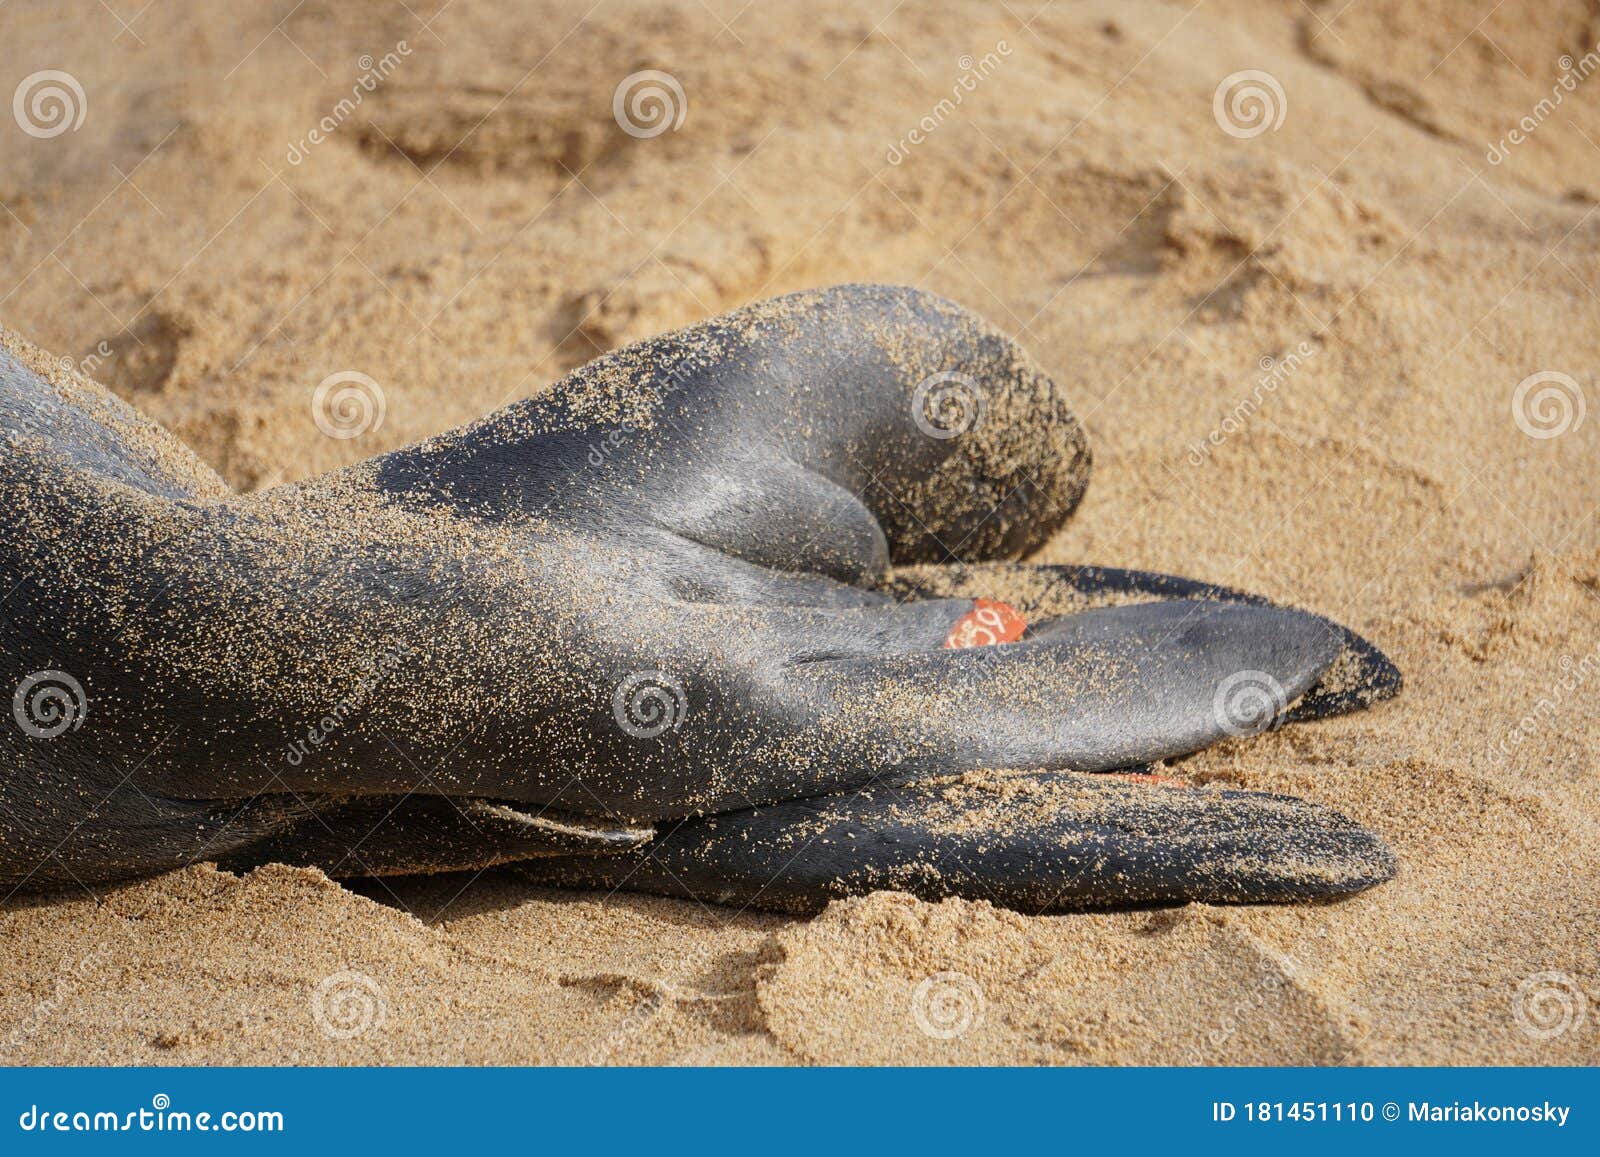 flipper tags on a hawaiian monk seal in kauai